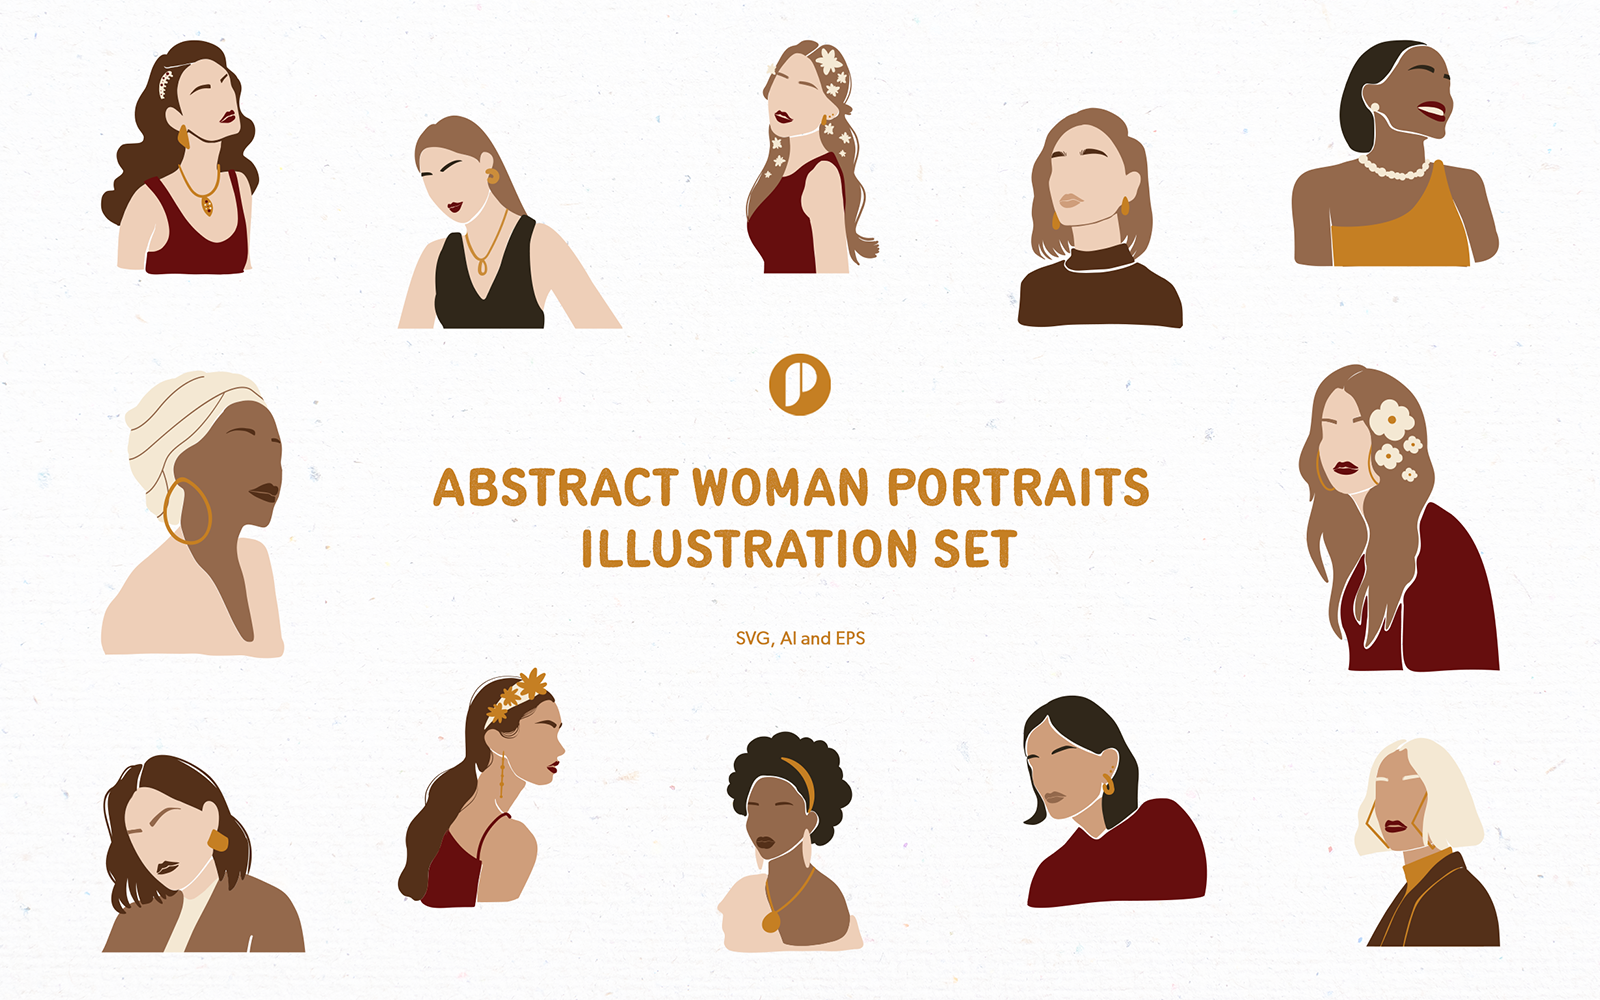 Abstract woman portraits illustration set